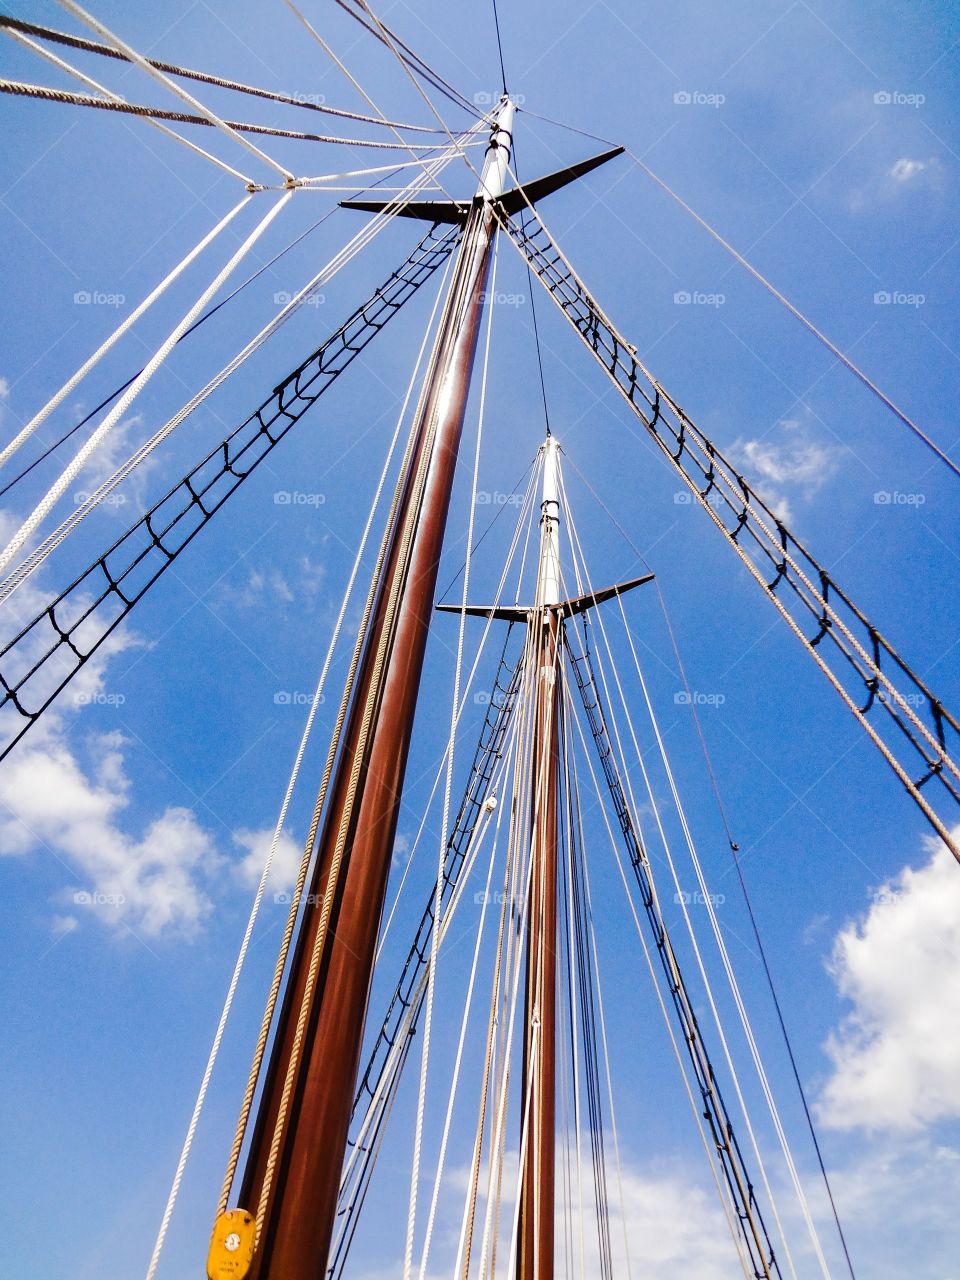 Ship Masts